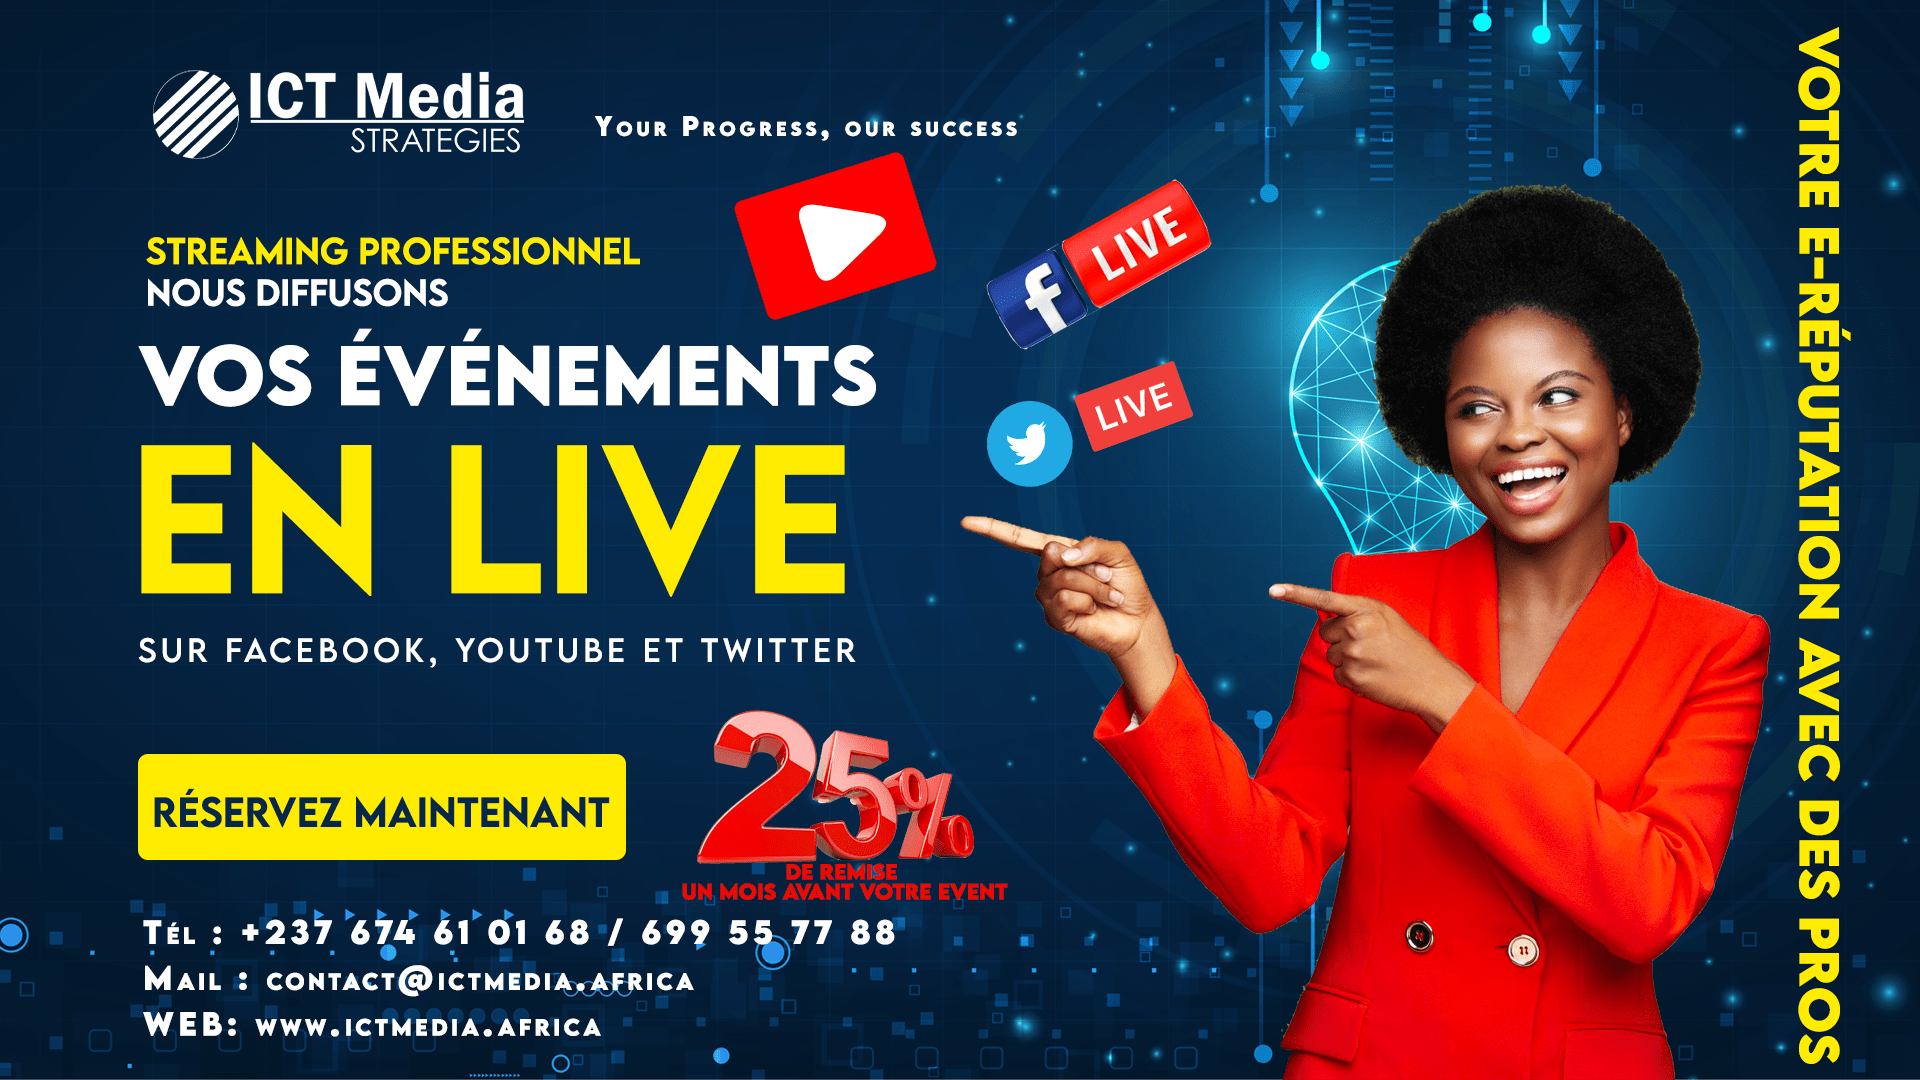 Live streaming professionnel au Cameroun avec ICT Media STRATEGIES 